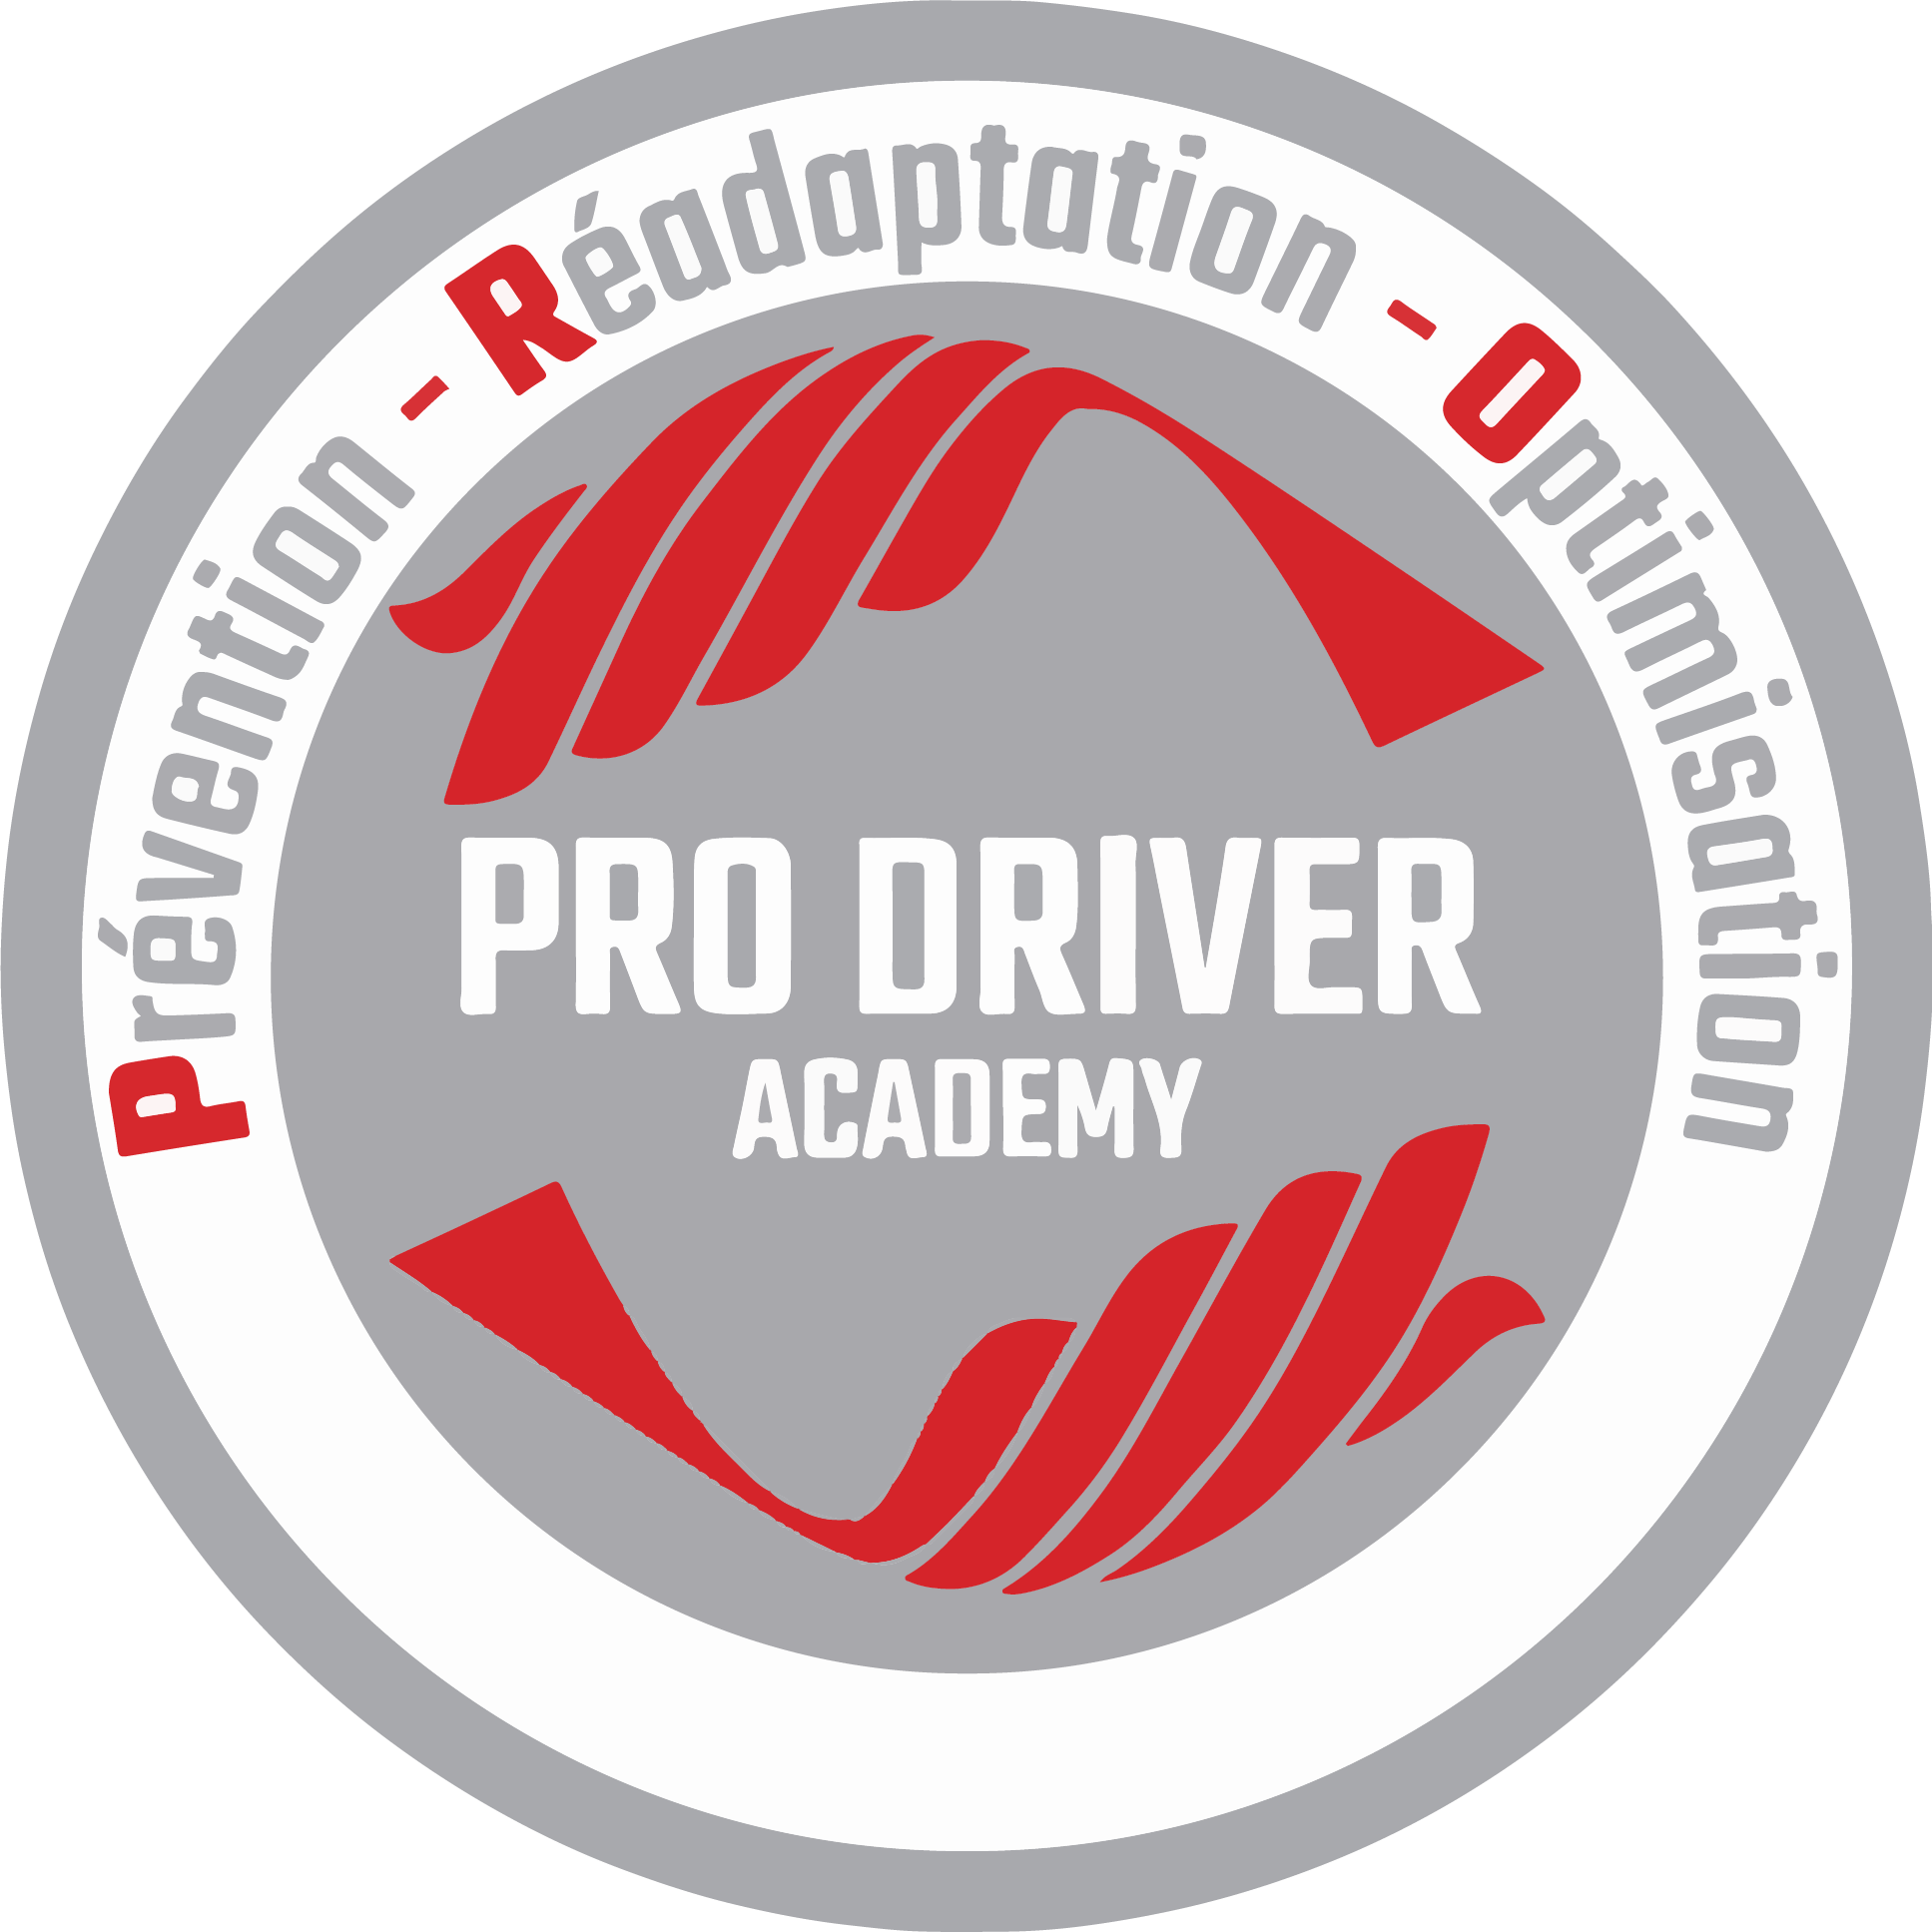 Pro Driver Academy